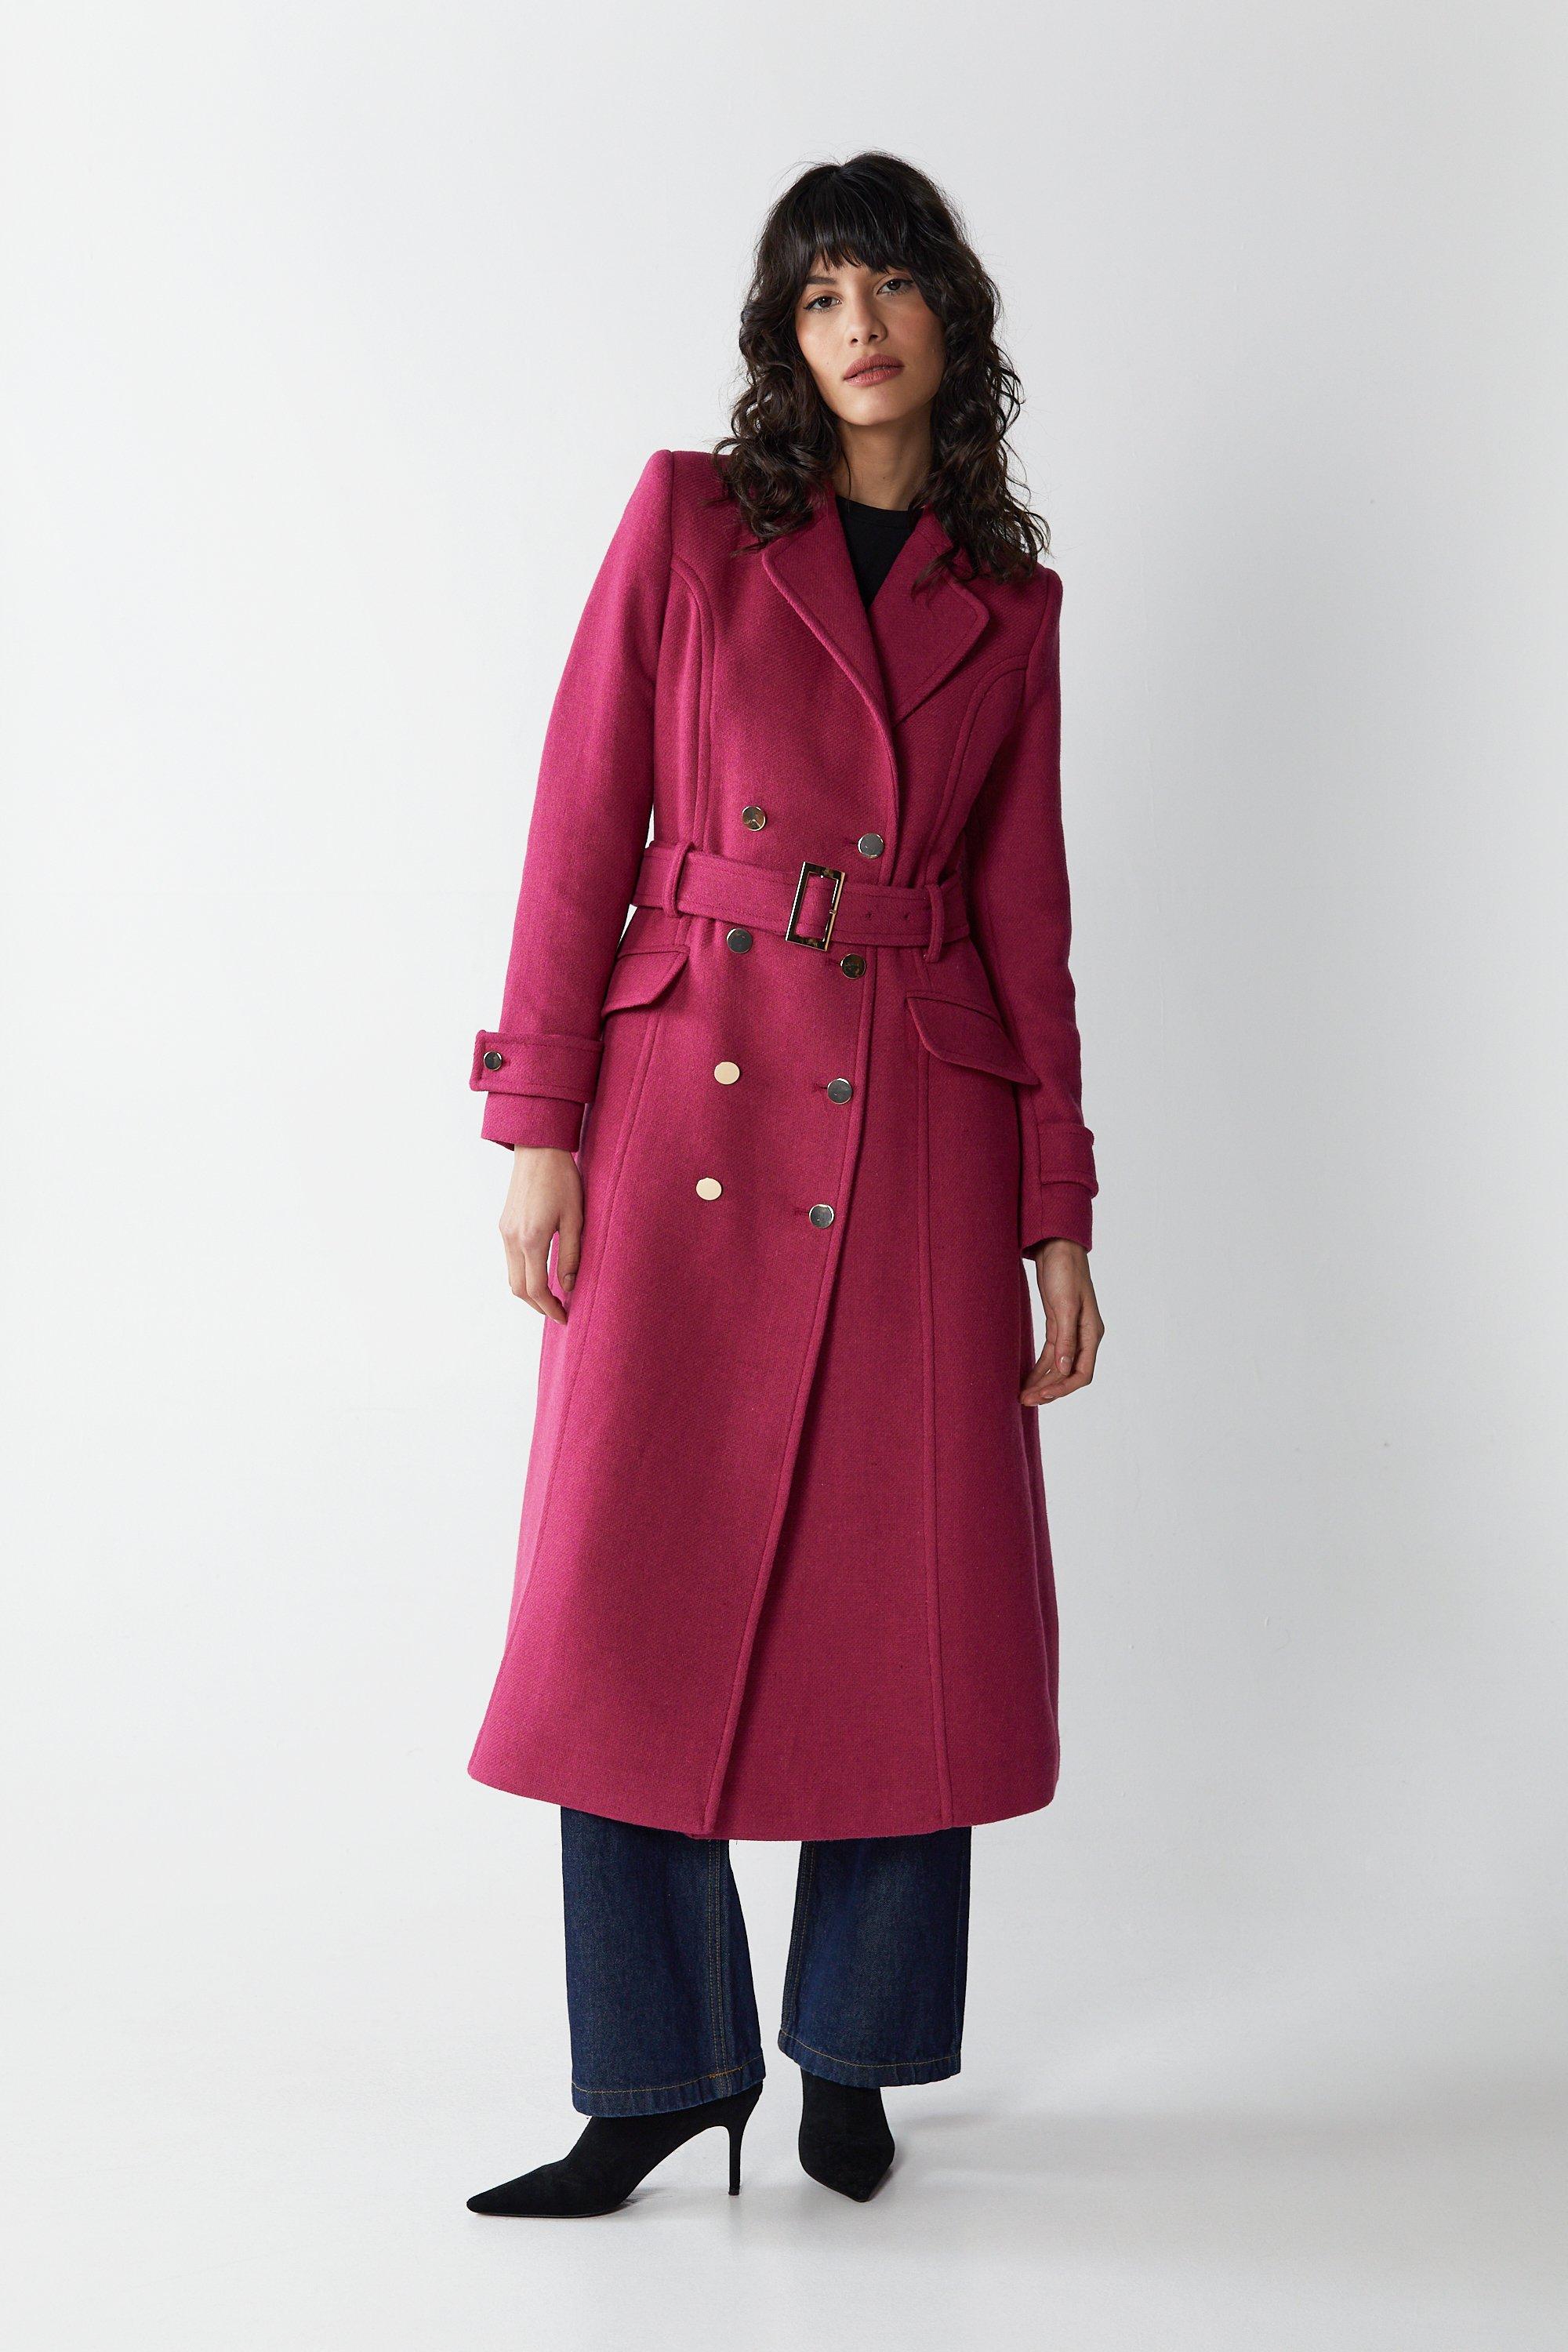 Jackets & Coats, Premium Double Breasted Italian Wool Tailored Coat